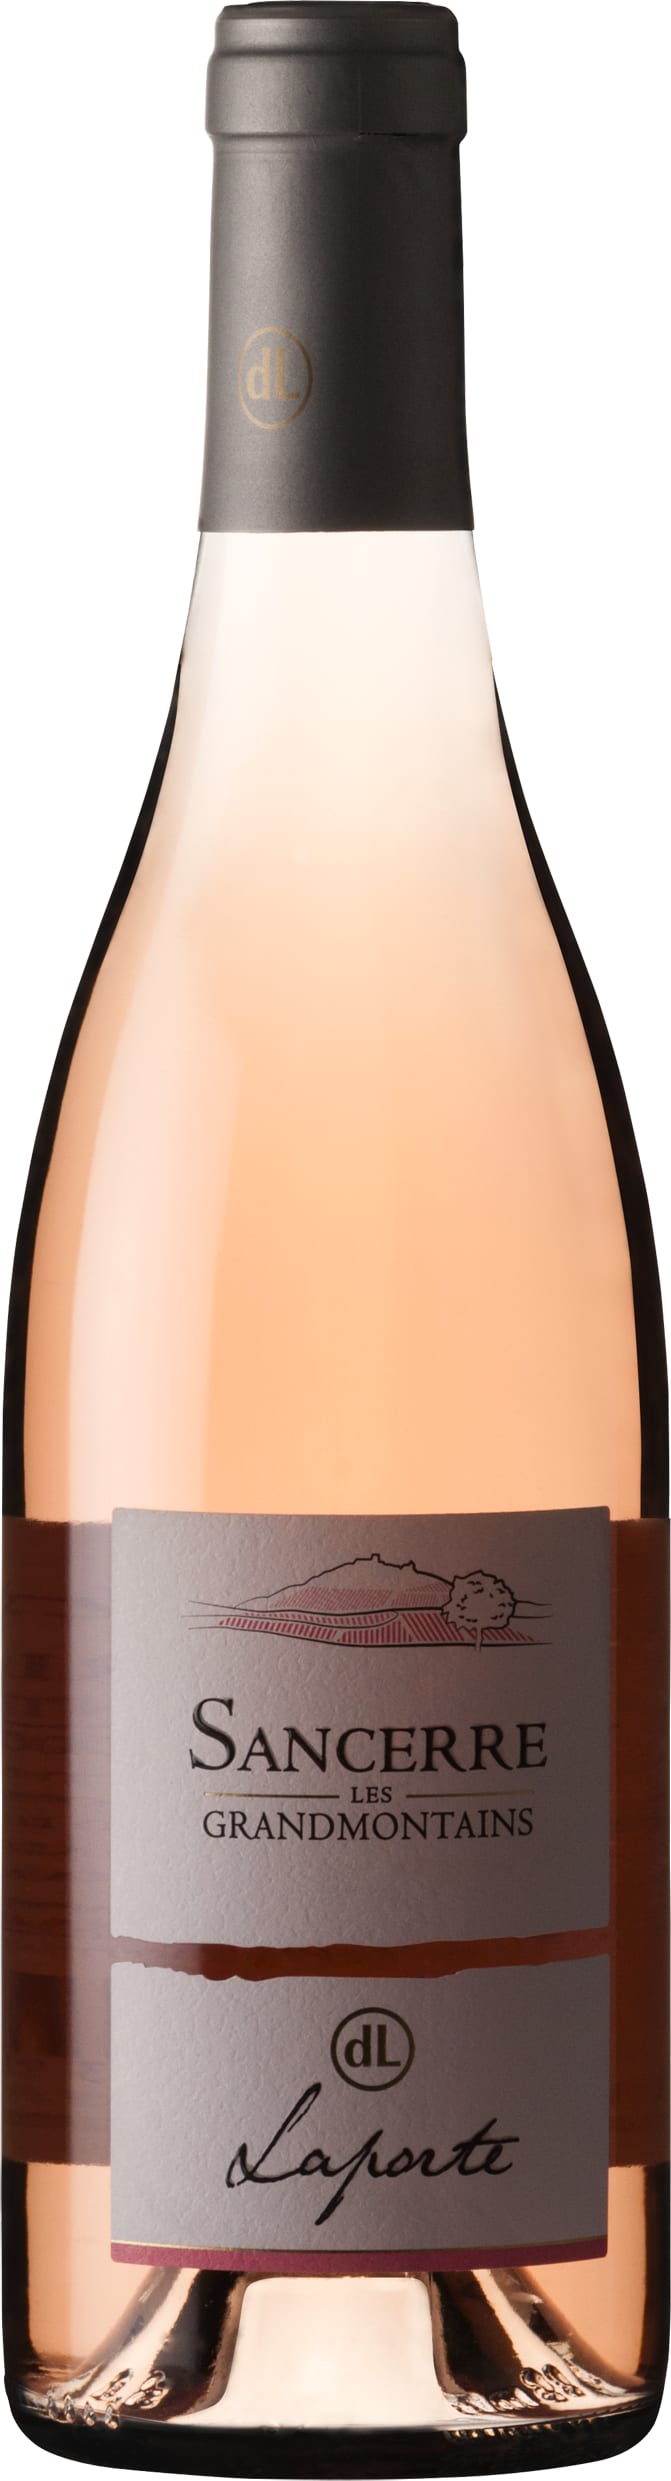 Domaine Laporte Sancerre 'Grandmontains' Rose 2022 75cl - Buy Domaine Laporte Wines from GREAT WINES DIRECT wine shop